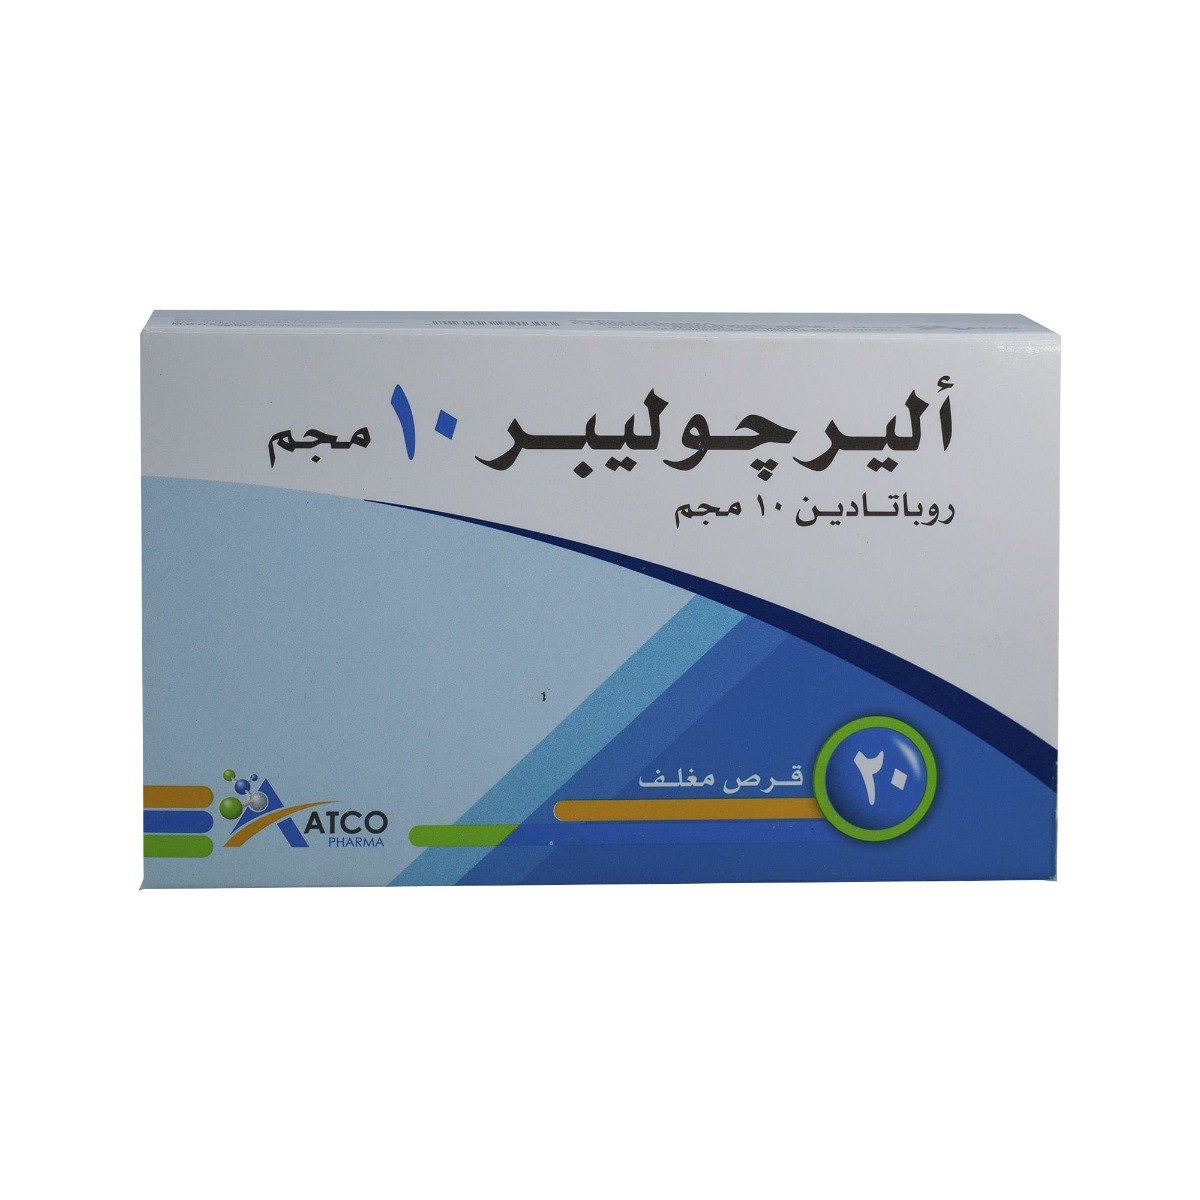 Alergoliber 10 mg - 20 Tablets - Bloom Pharmacy